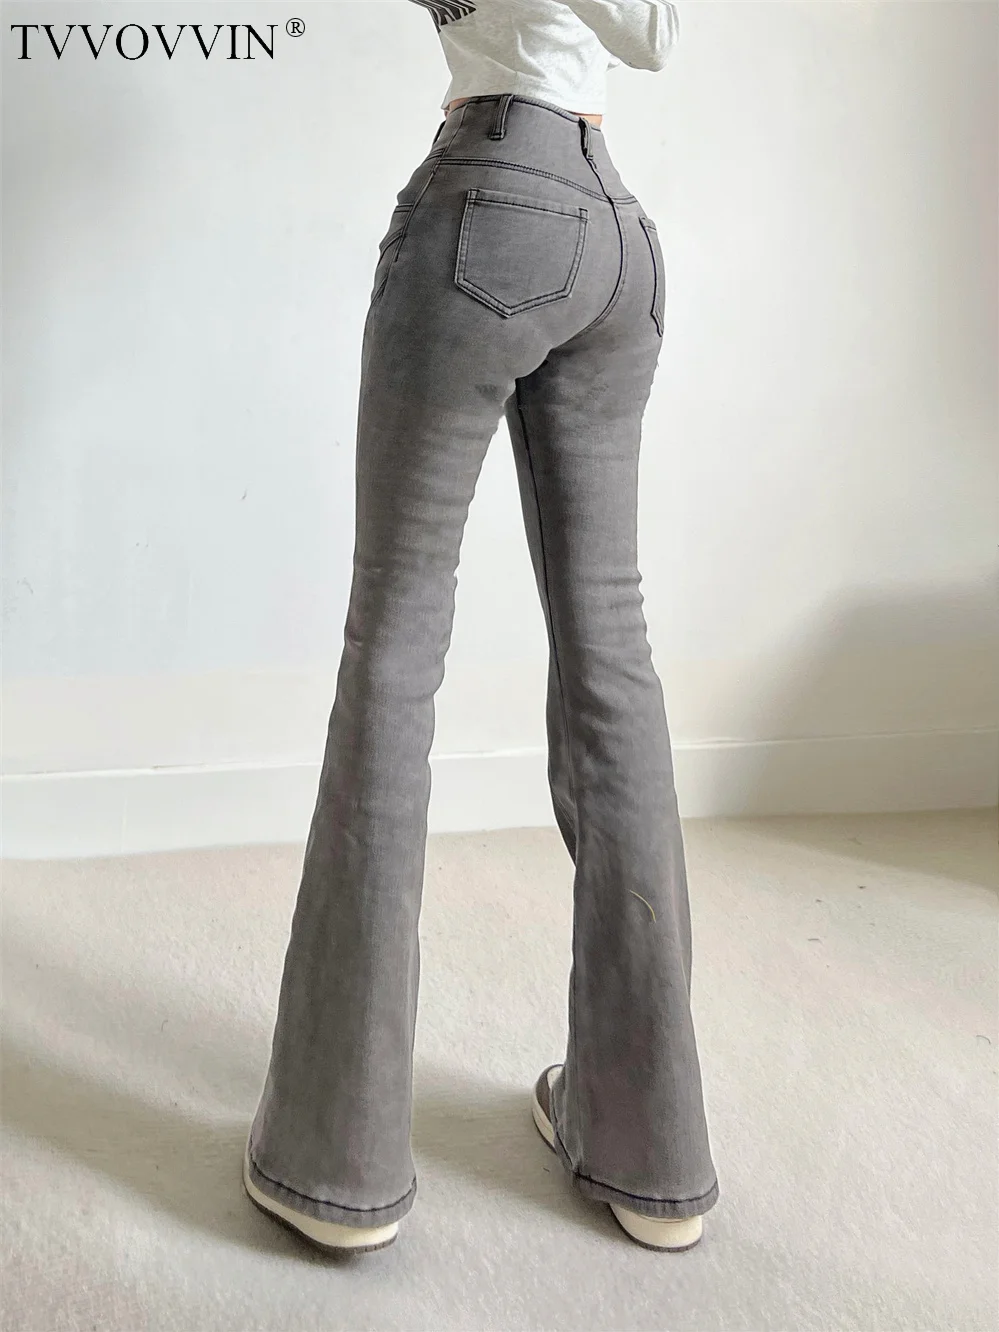 

TVVOVVIN Grey Autumn And Winter Denim Micro Flared Trousers Women's Slim Peach Hip High Waist Mop Jeans Trousers R2RK